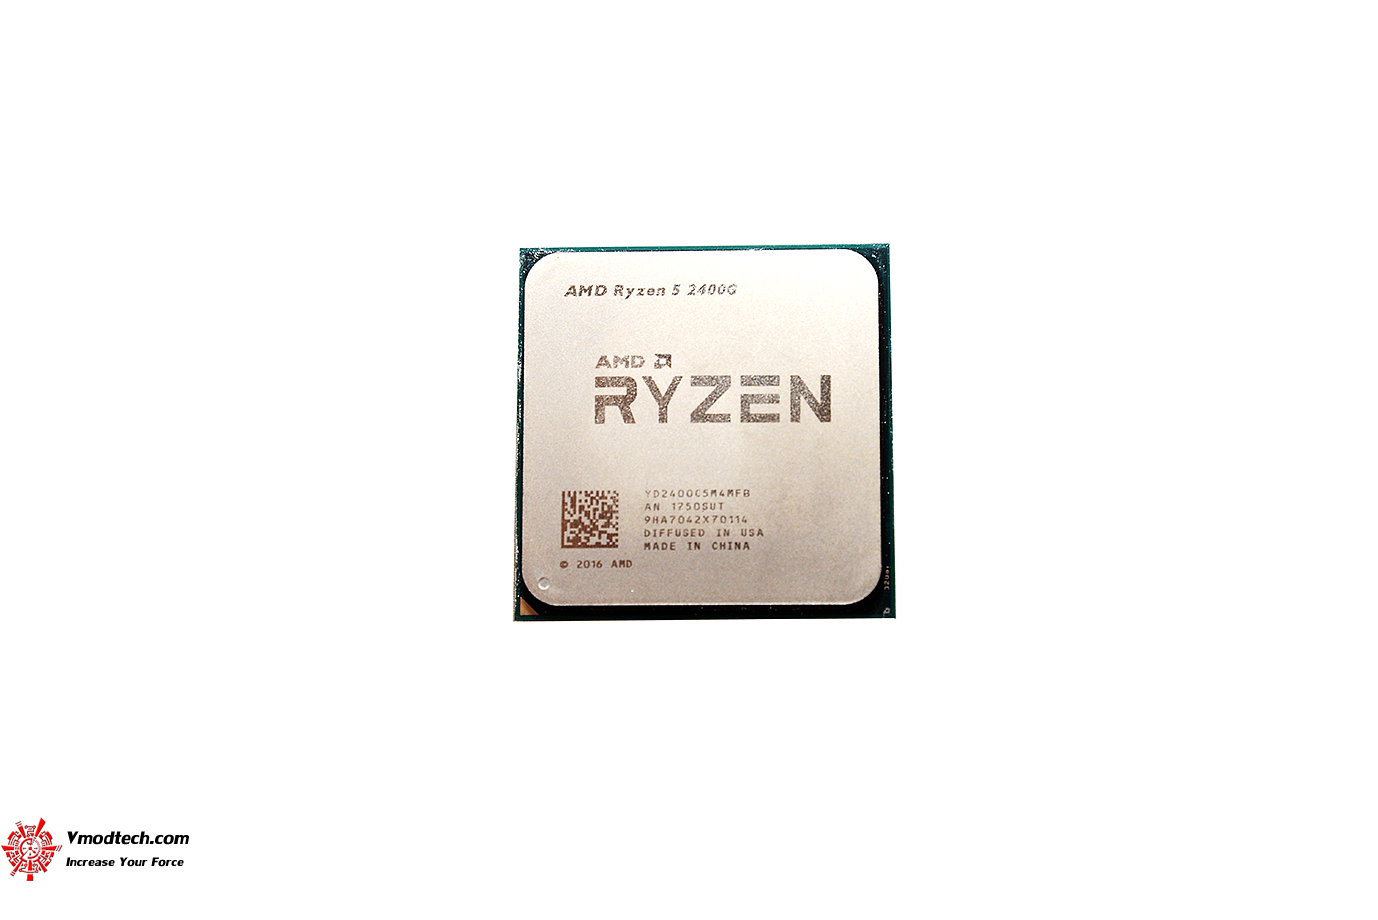 dsc 8751 AMD RYZEN5 2400G WITH GIGABYTE AX370 GAMING 5 REVIEW 